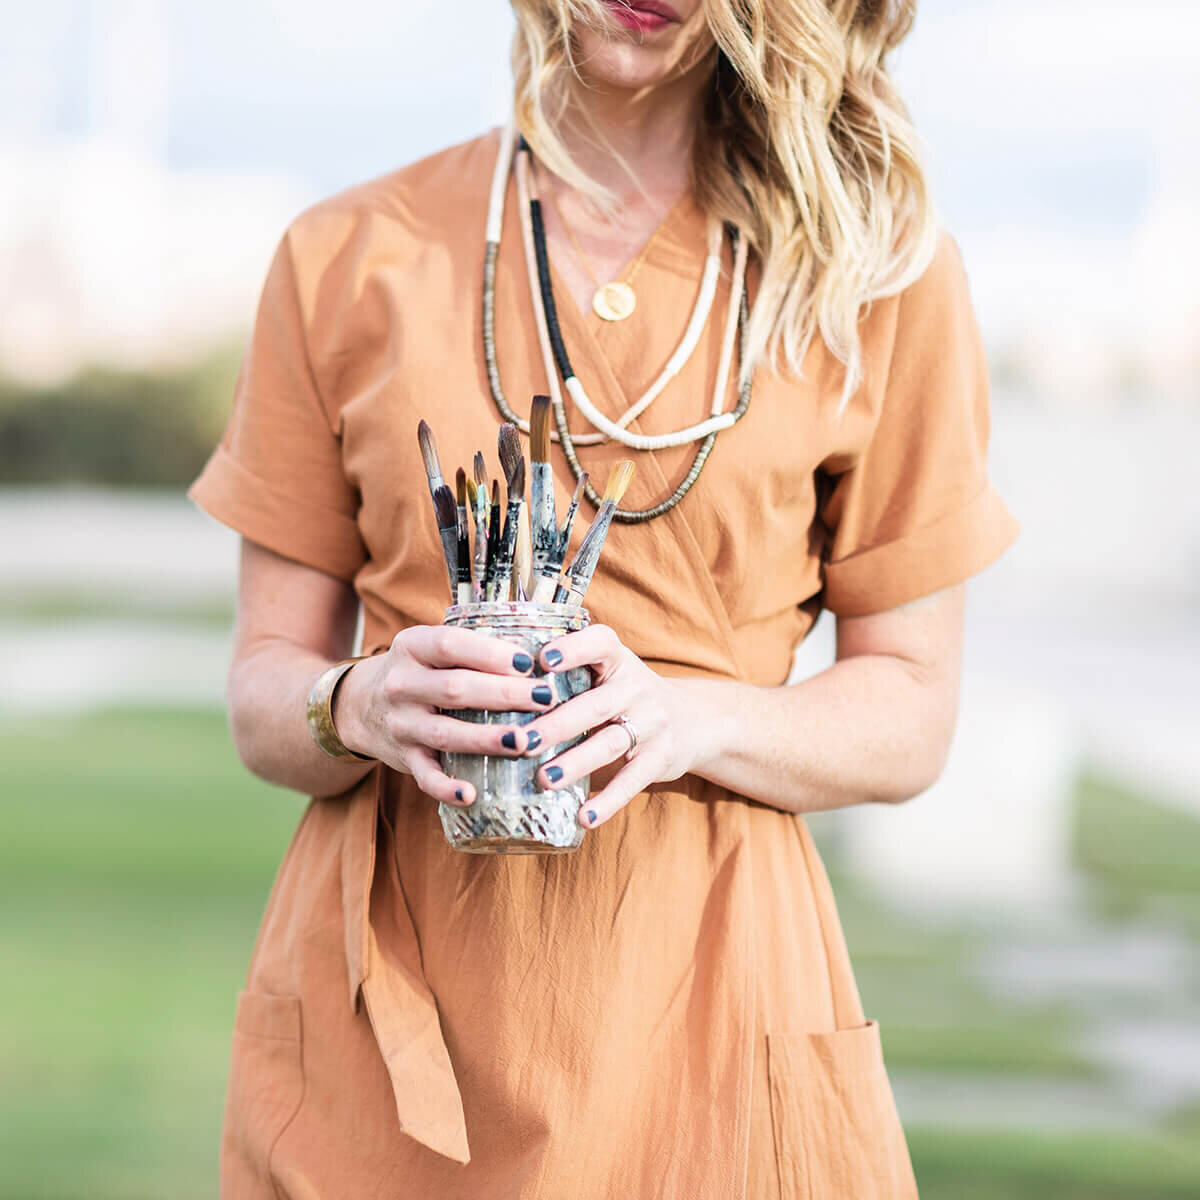 girl holding jar with paintbrushes